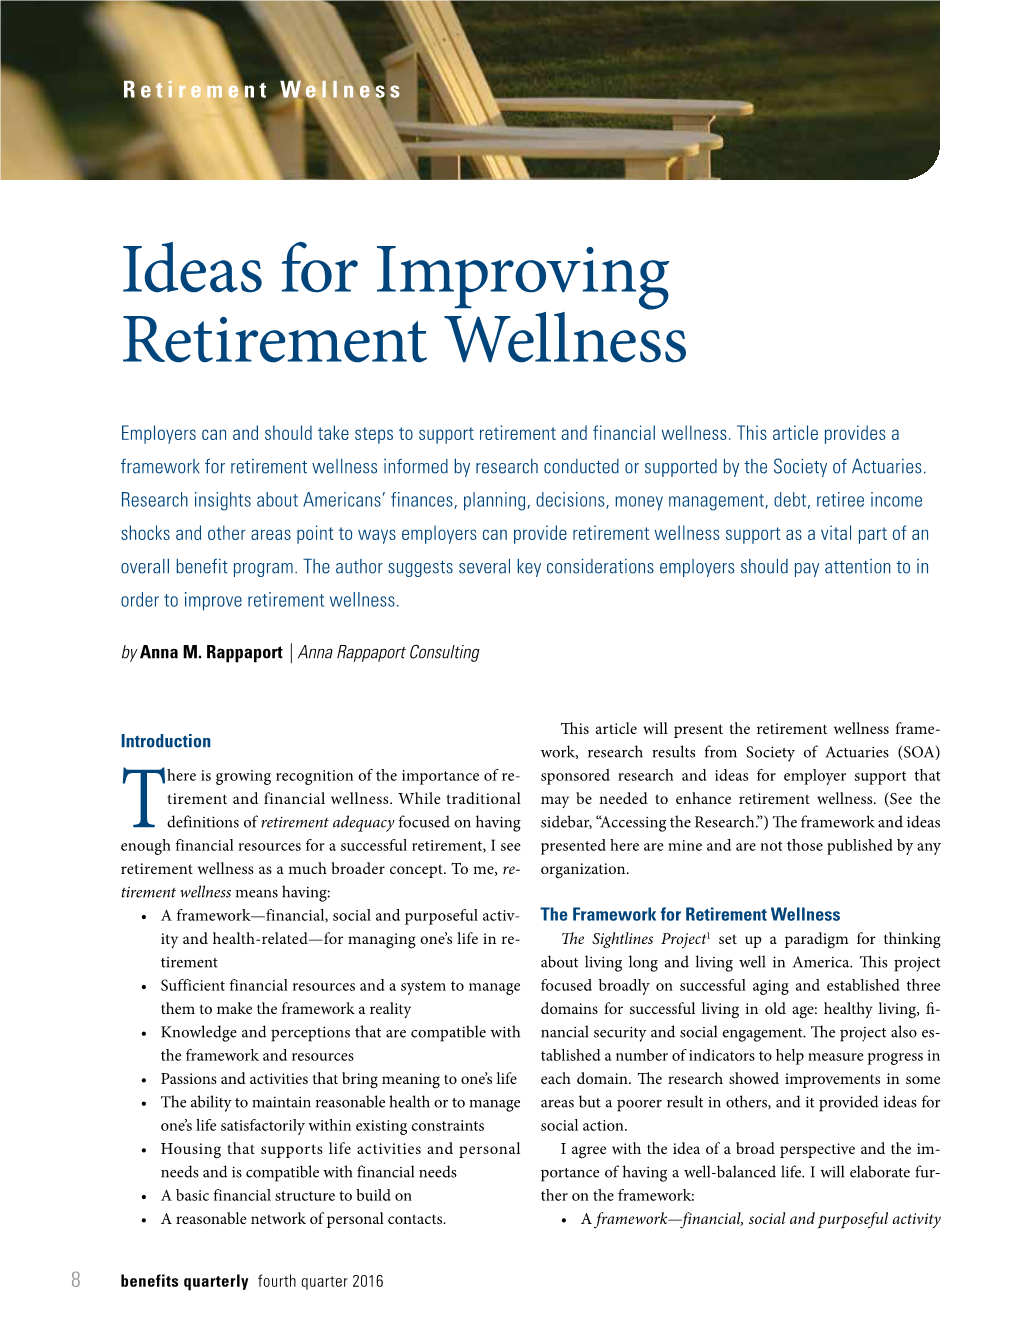 Ideas for Improving Retirement Wellness